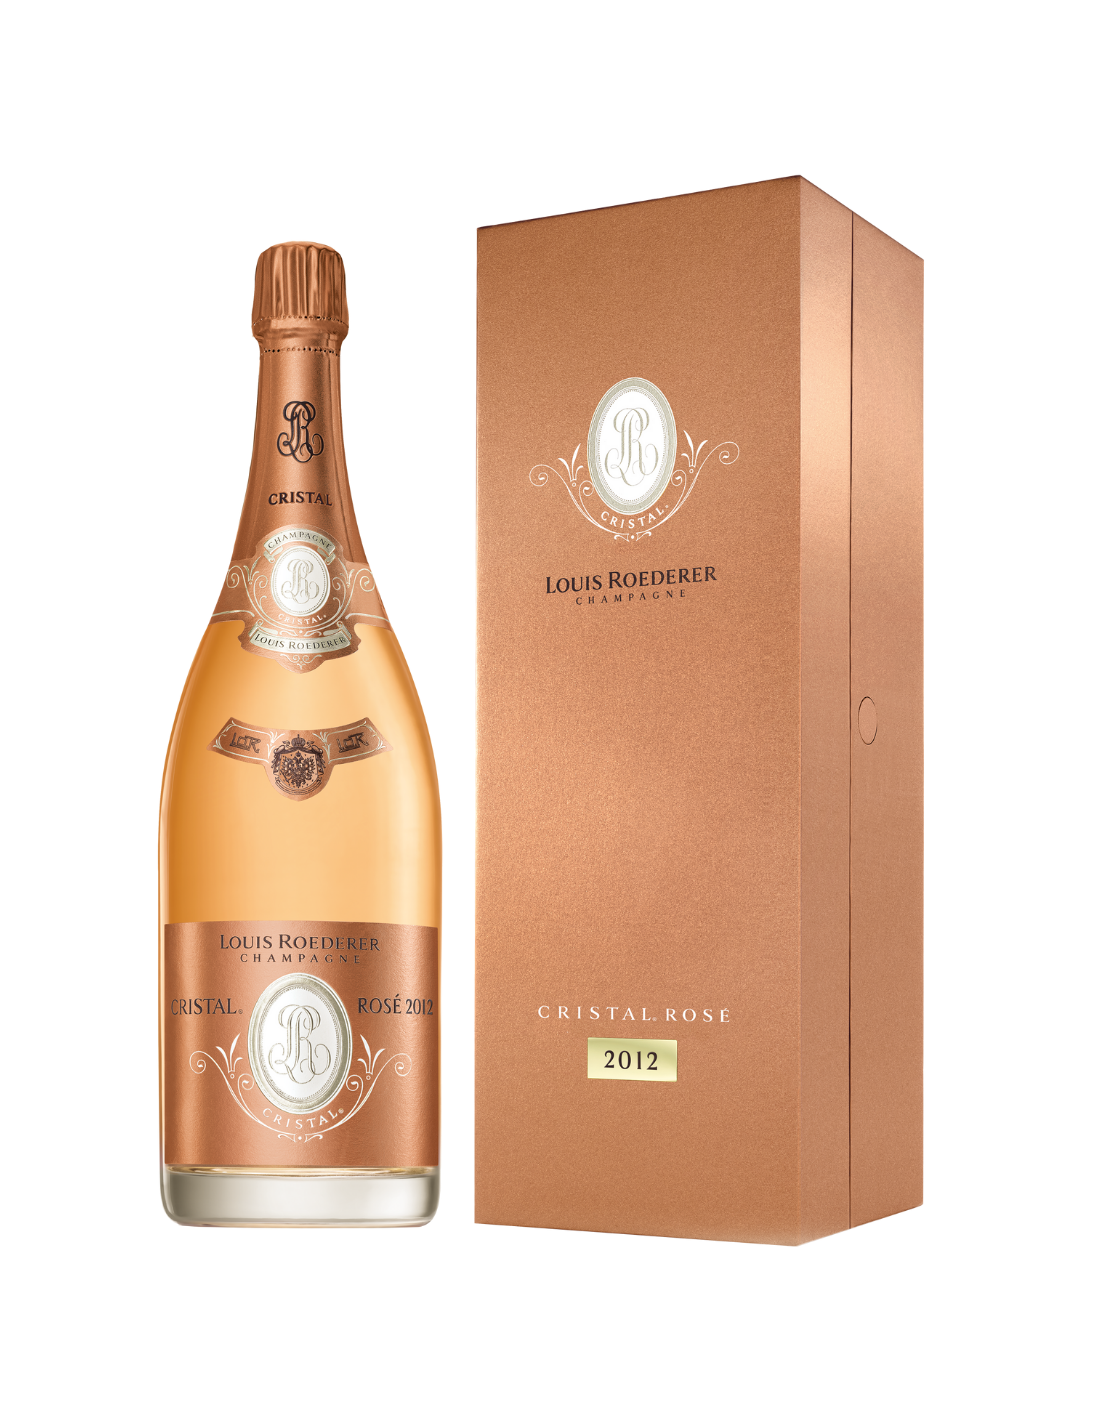 Sampanie Louis Roederer Cristal Rose 2012, 0.75L, 12% alc., Franta alcooldiscount.ro